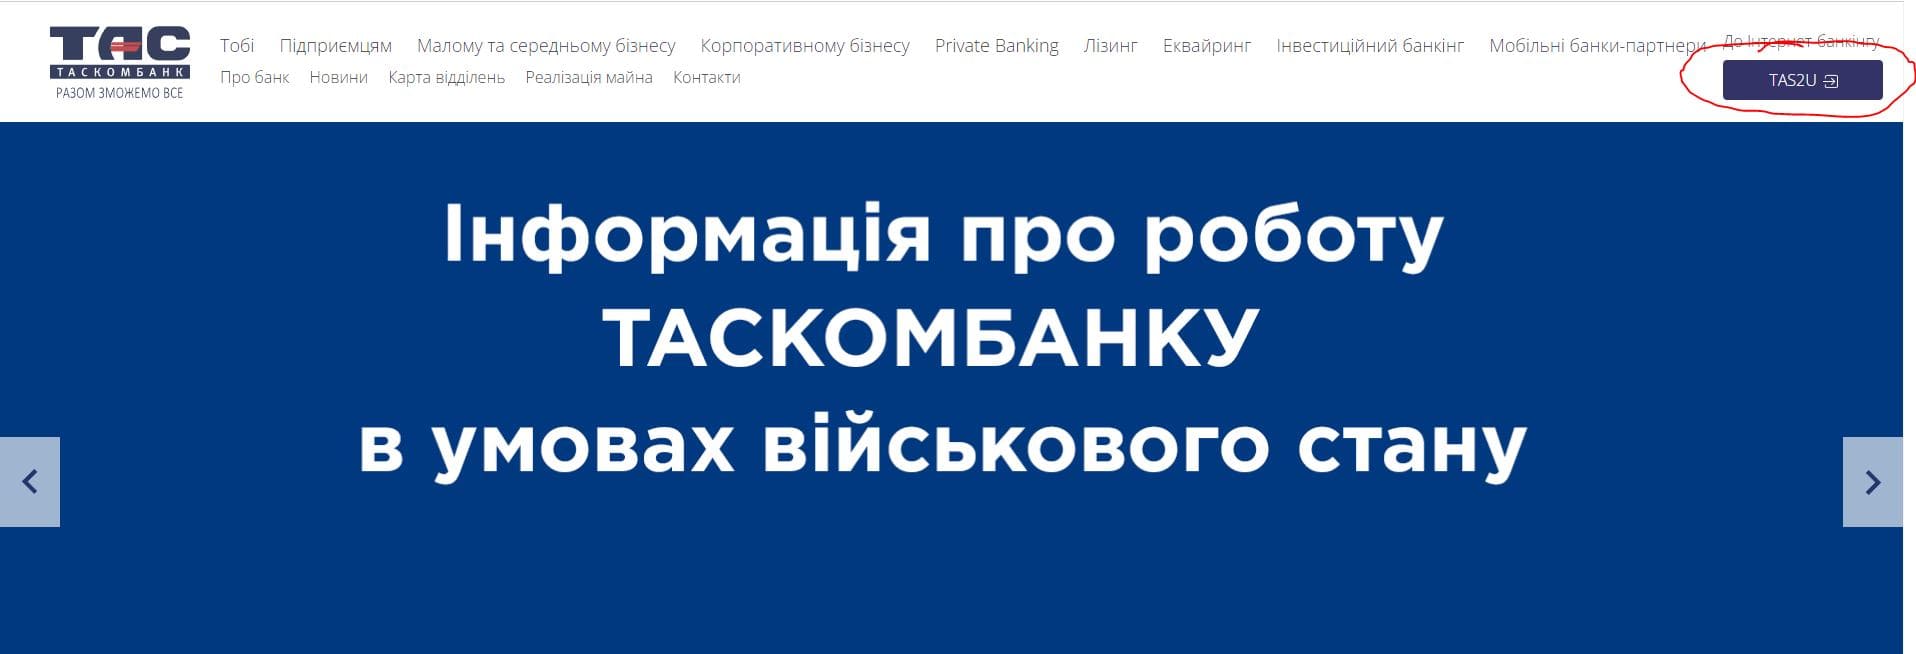 ТАСКОМБАНК (tascombank.ua)